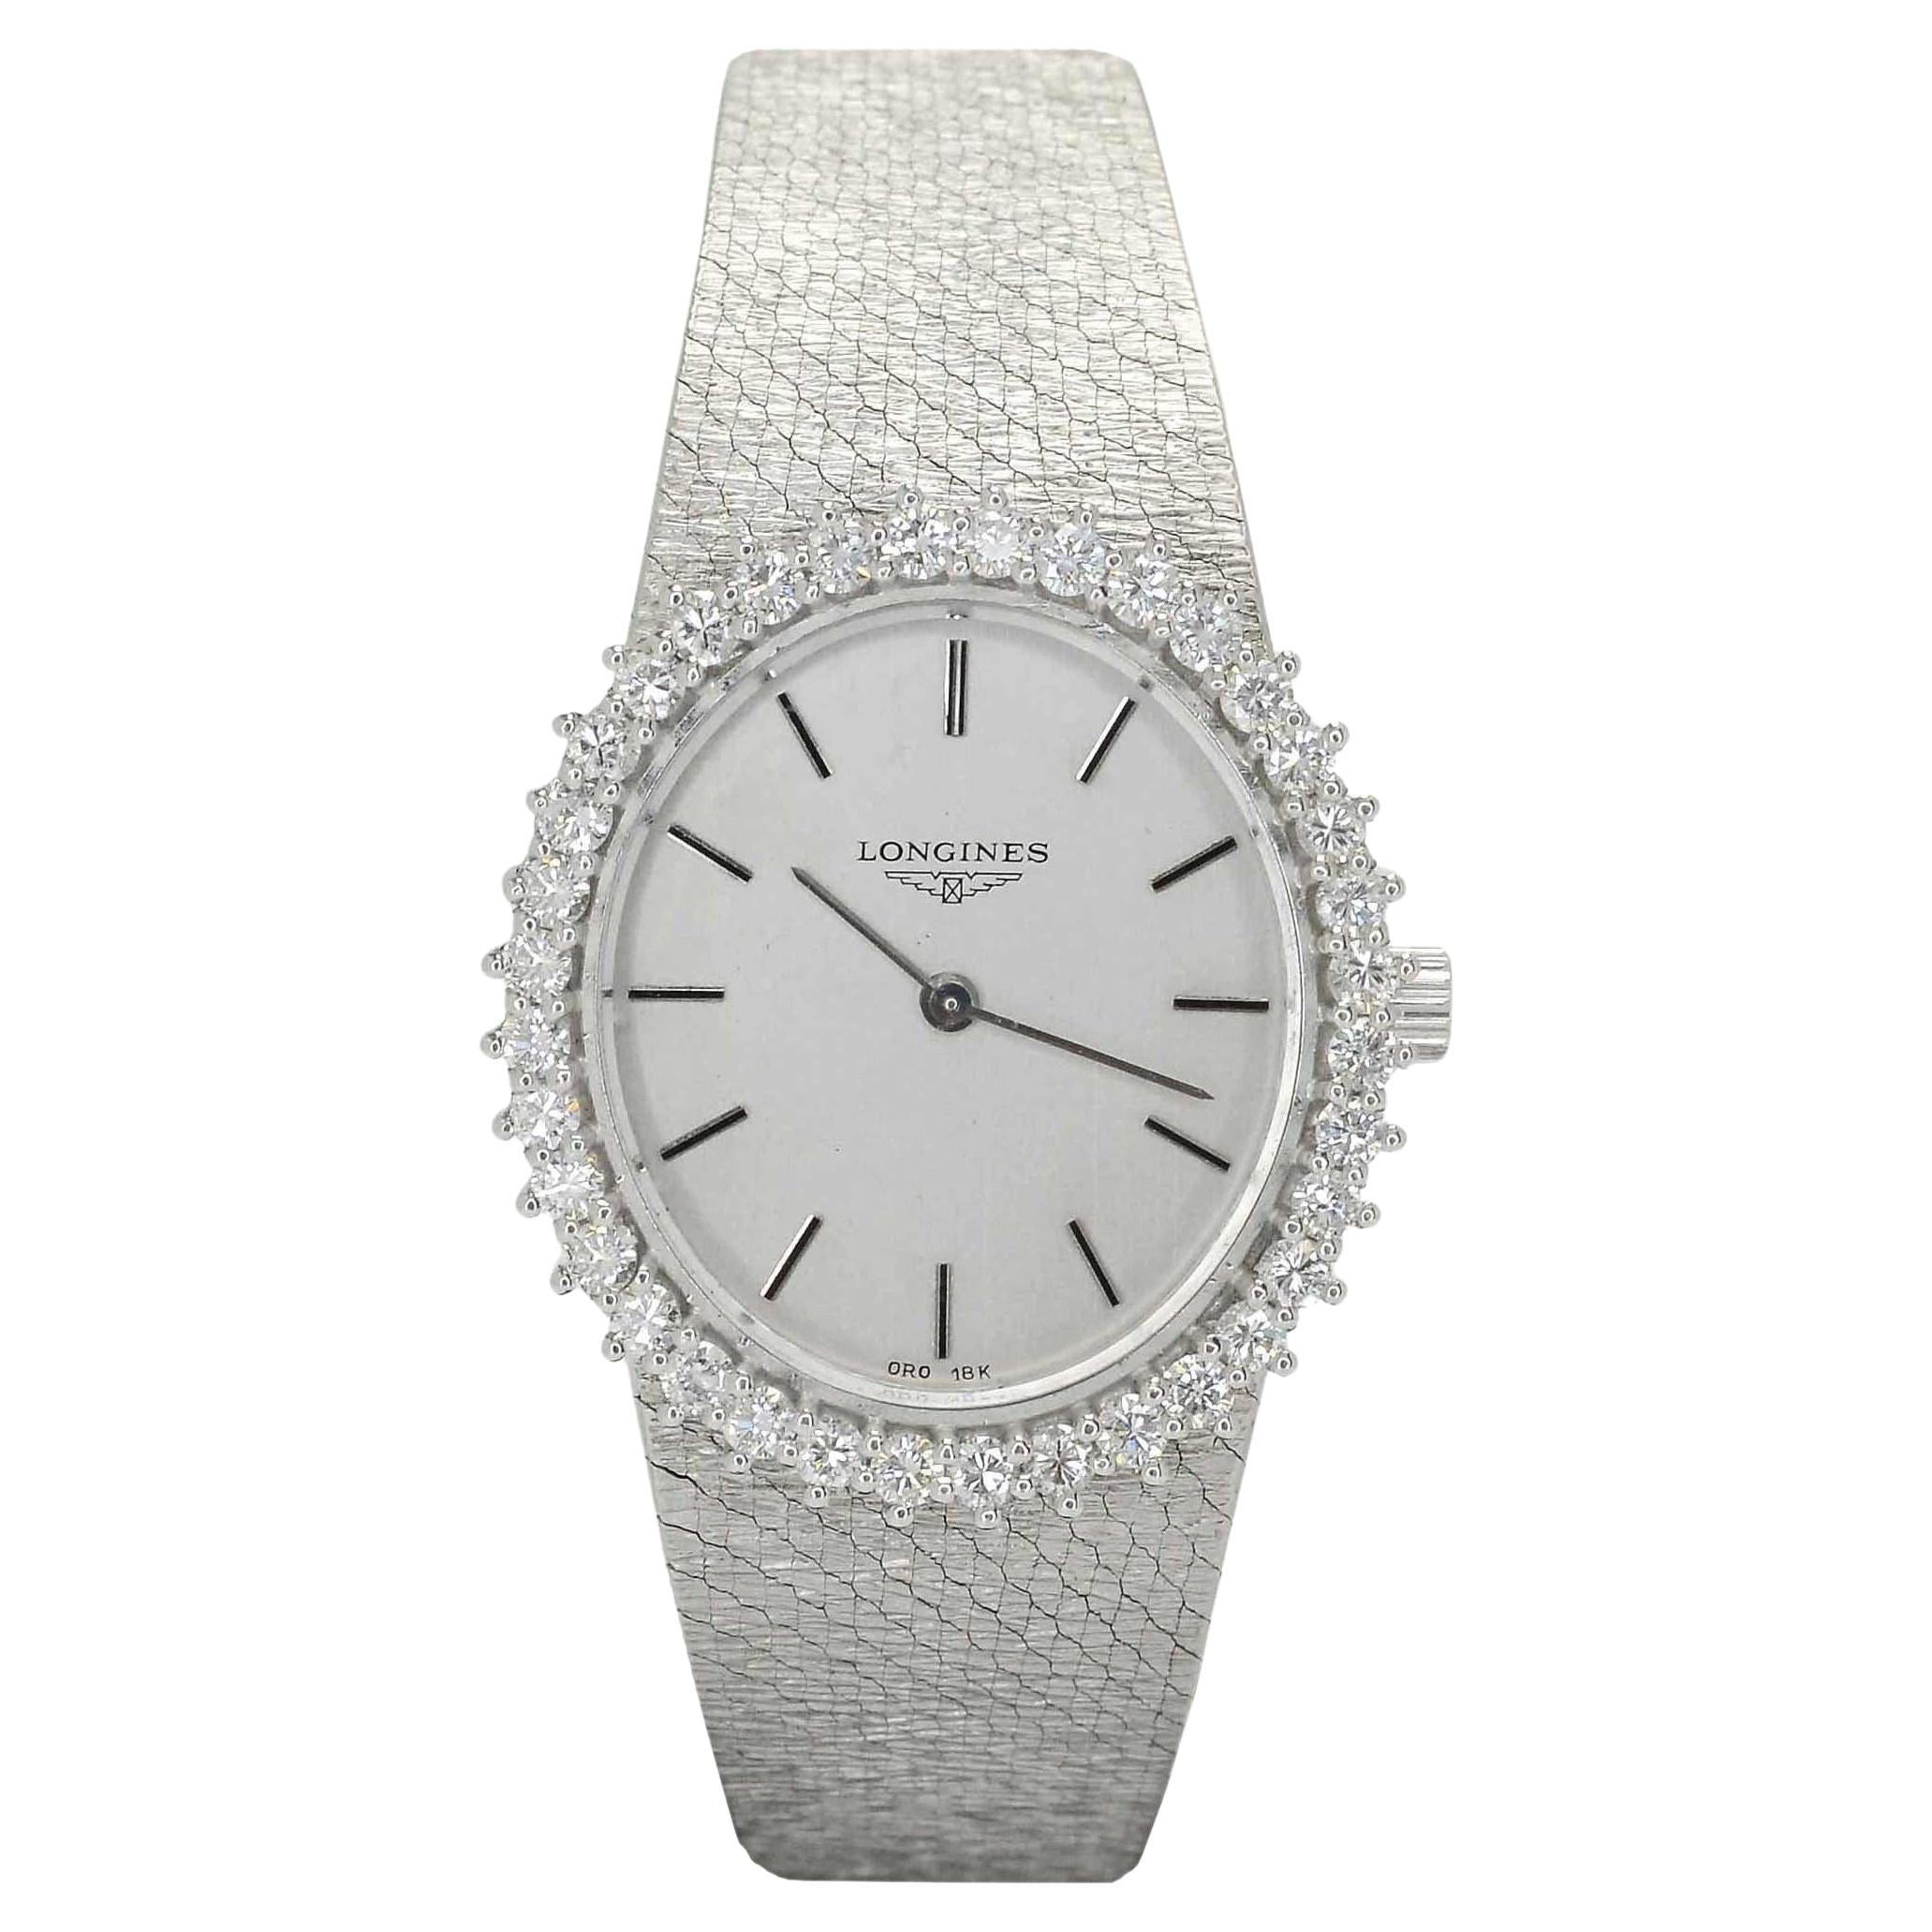 Vintage White Gold Ladies' Longines Diamond Cocktail Watch